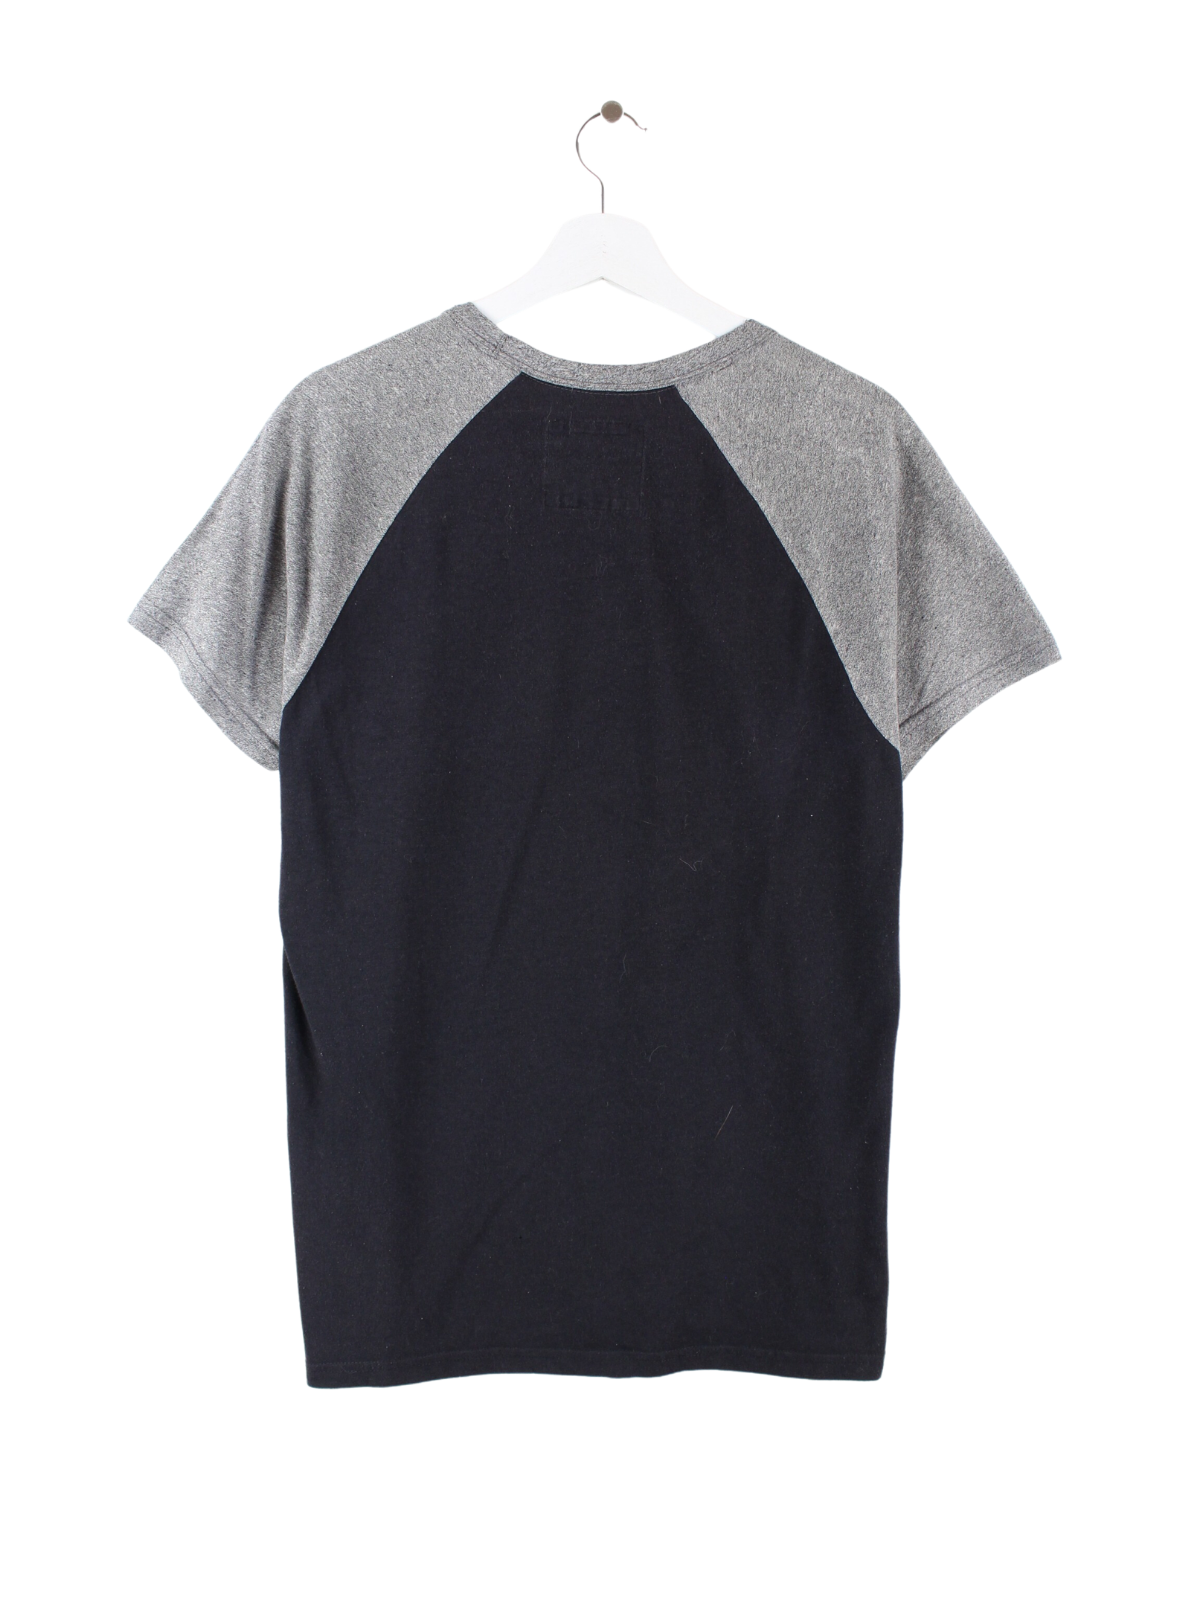 Hollister T-Shirt Women's XS Black Gray bleach wrinkle Oversized *Wild and  Free*